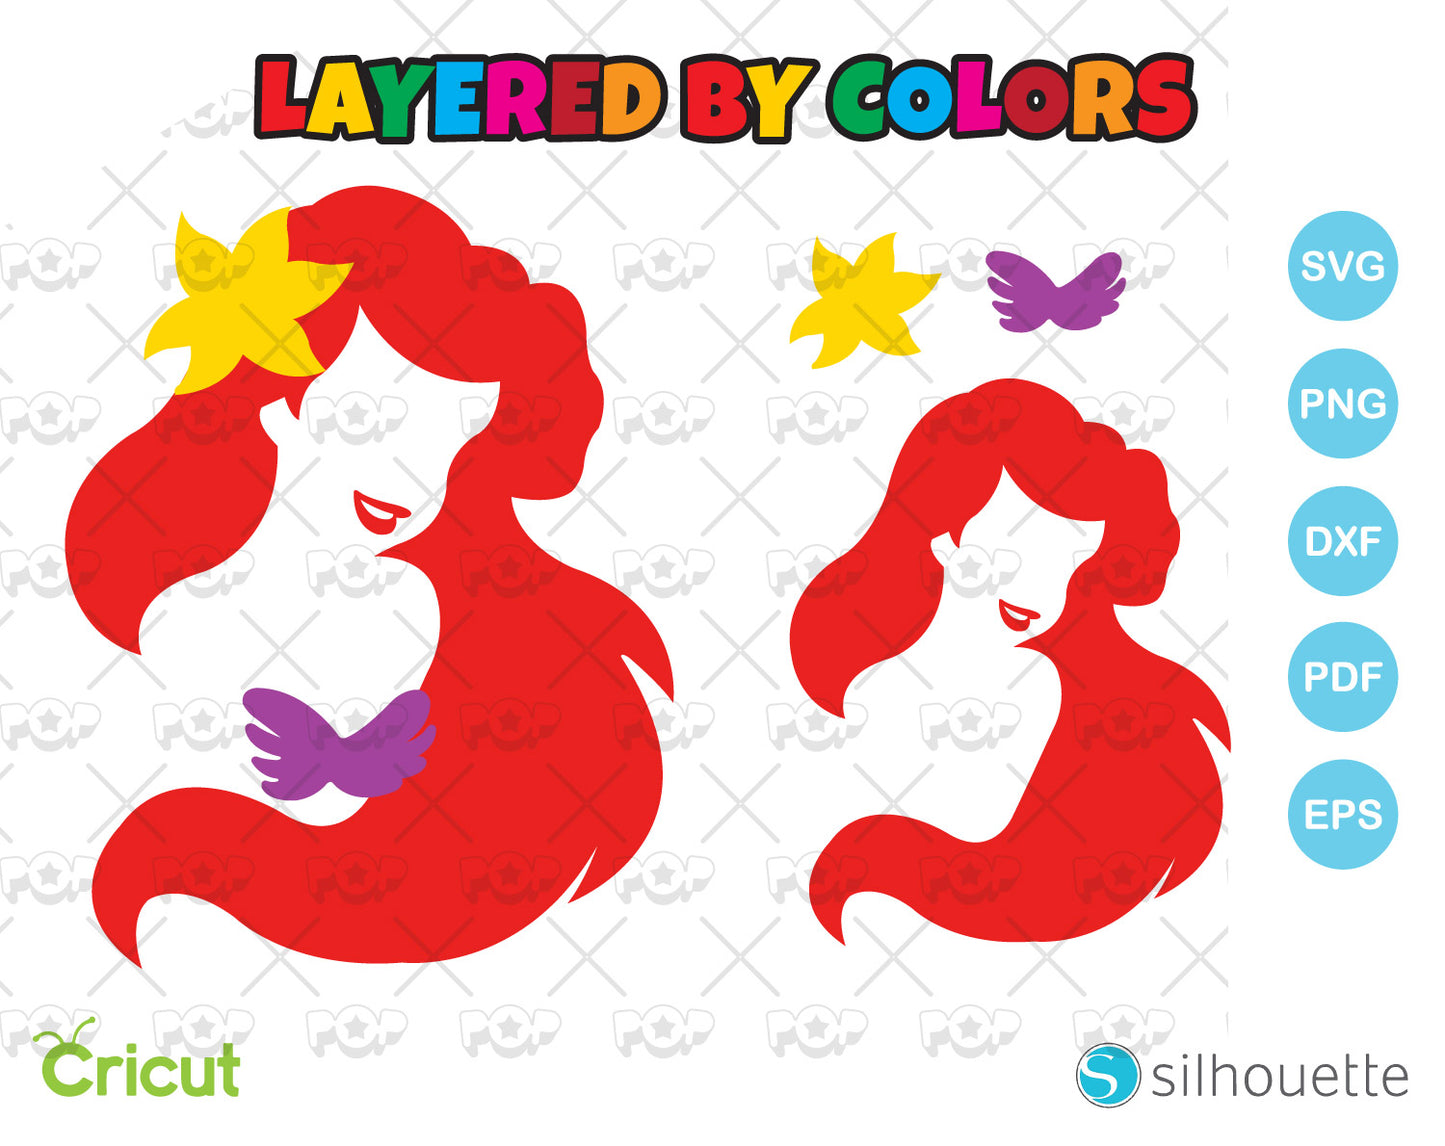 FREE Princess Ariel clipart, Little Mermaid SVG cut files for cricut silhouette, instant download